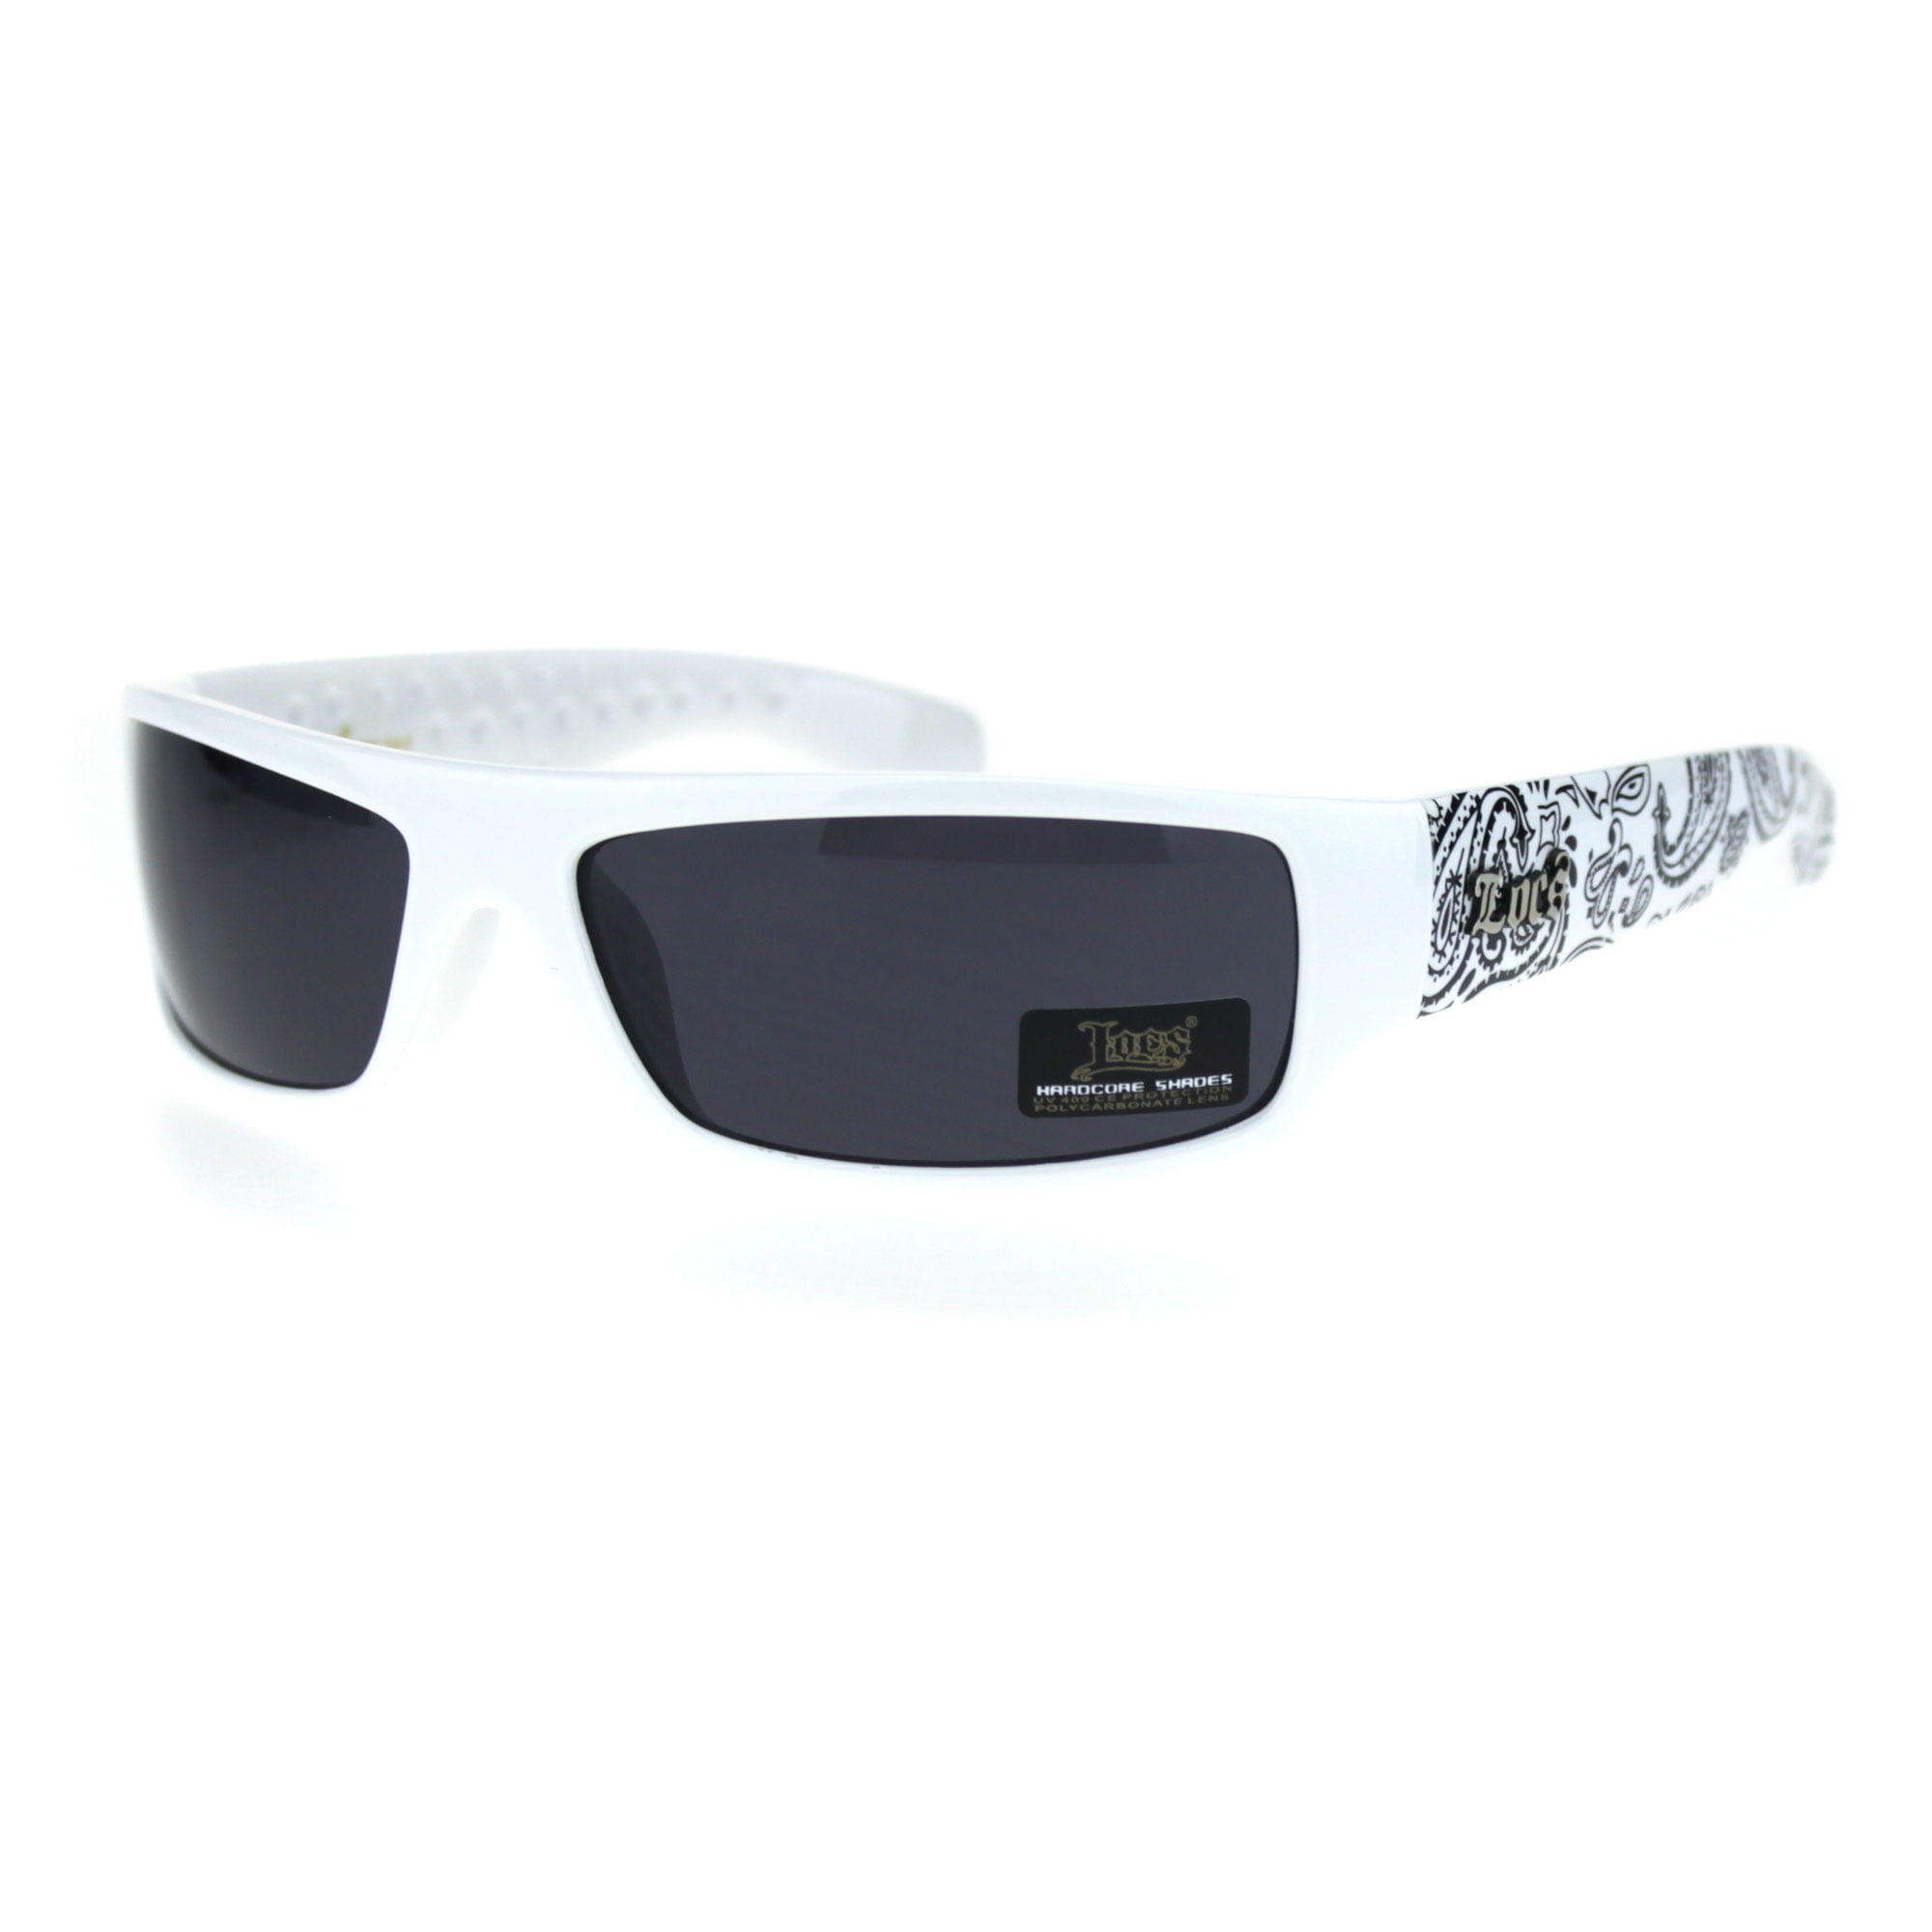 Sunglasses LOCS Hard Core Shades Very Cool Men's Blue Nice Bandana Design lc9003 